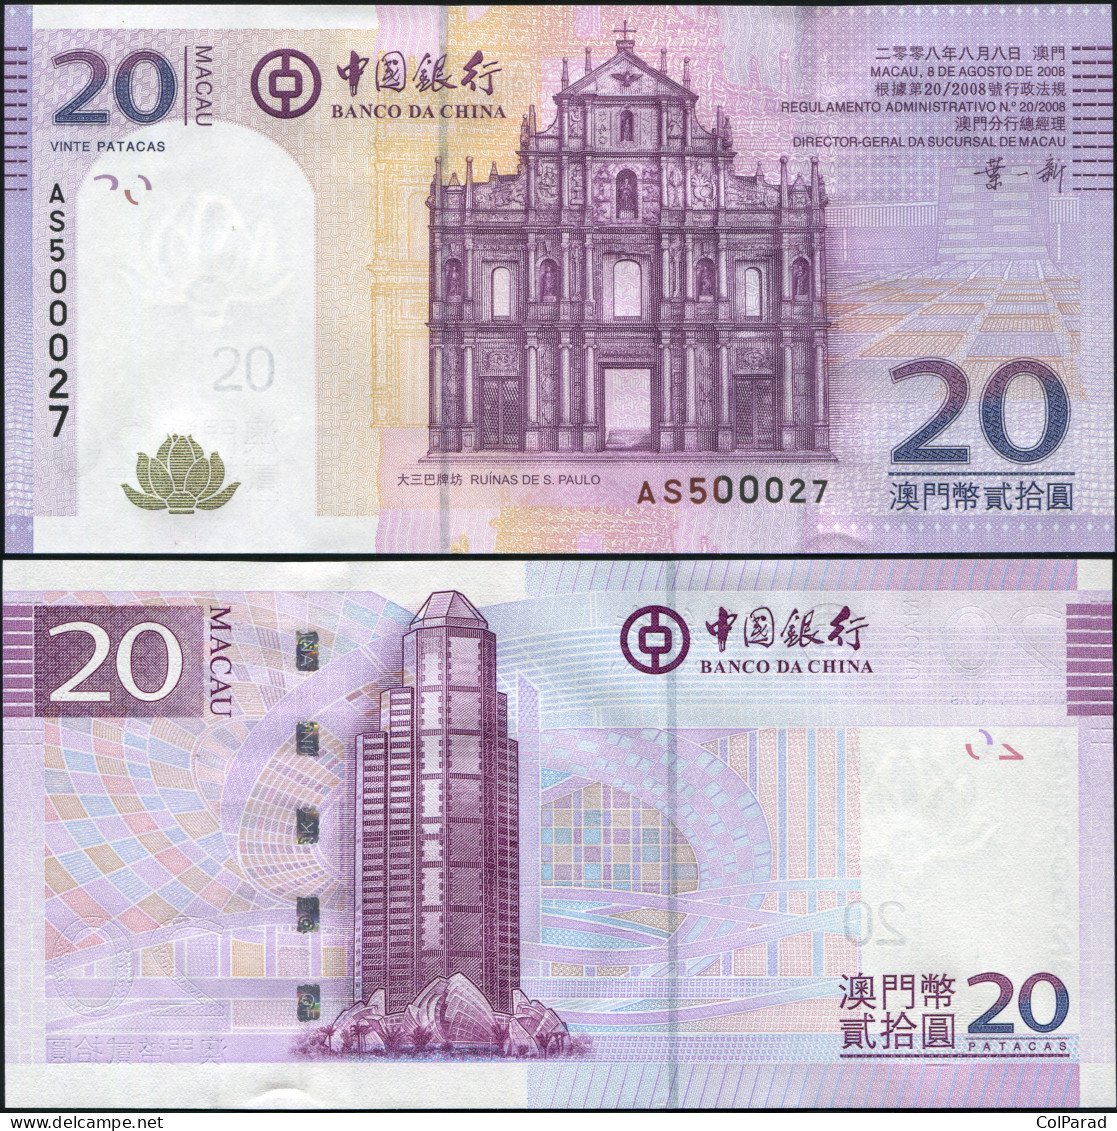 MACAO 20 PATACAS - 08.08.2008 (2009) - Paper Unc - P.109a Banknote - Macao